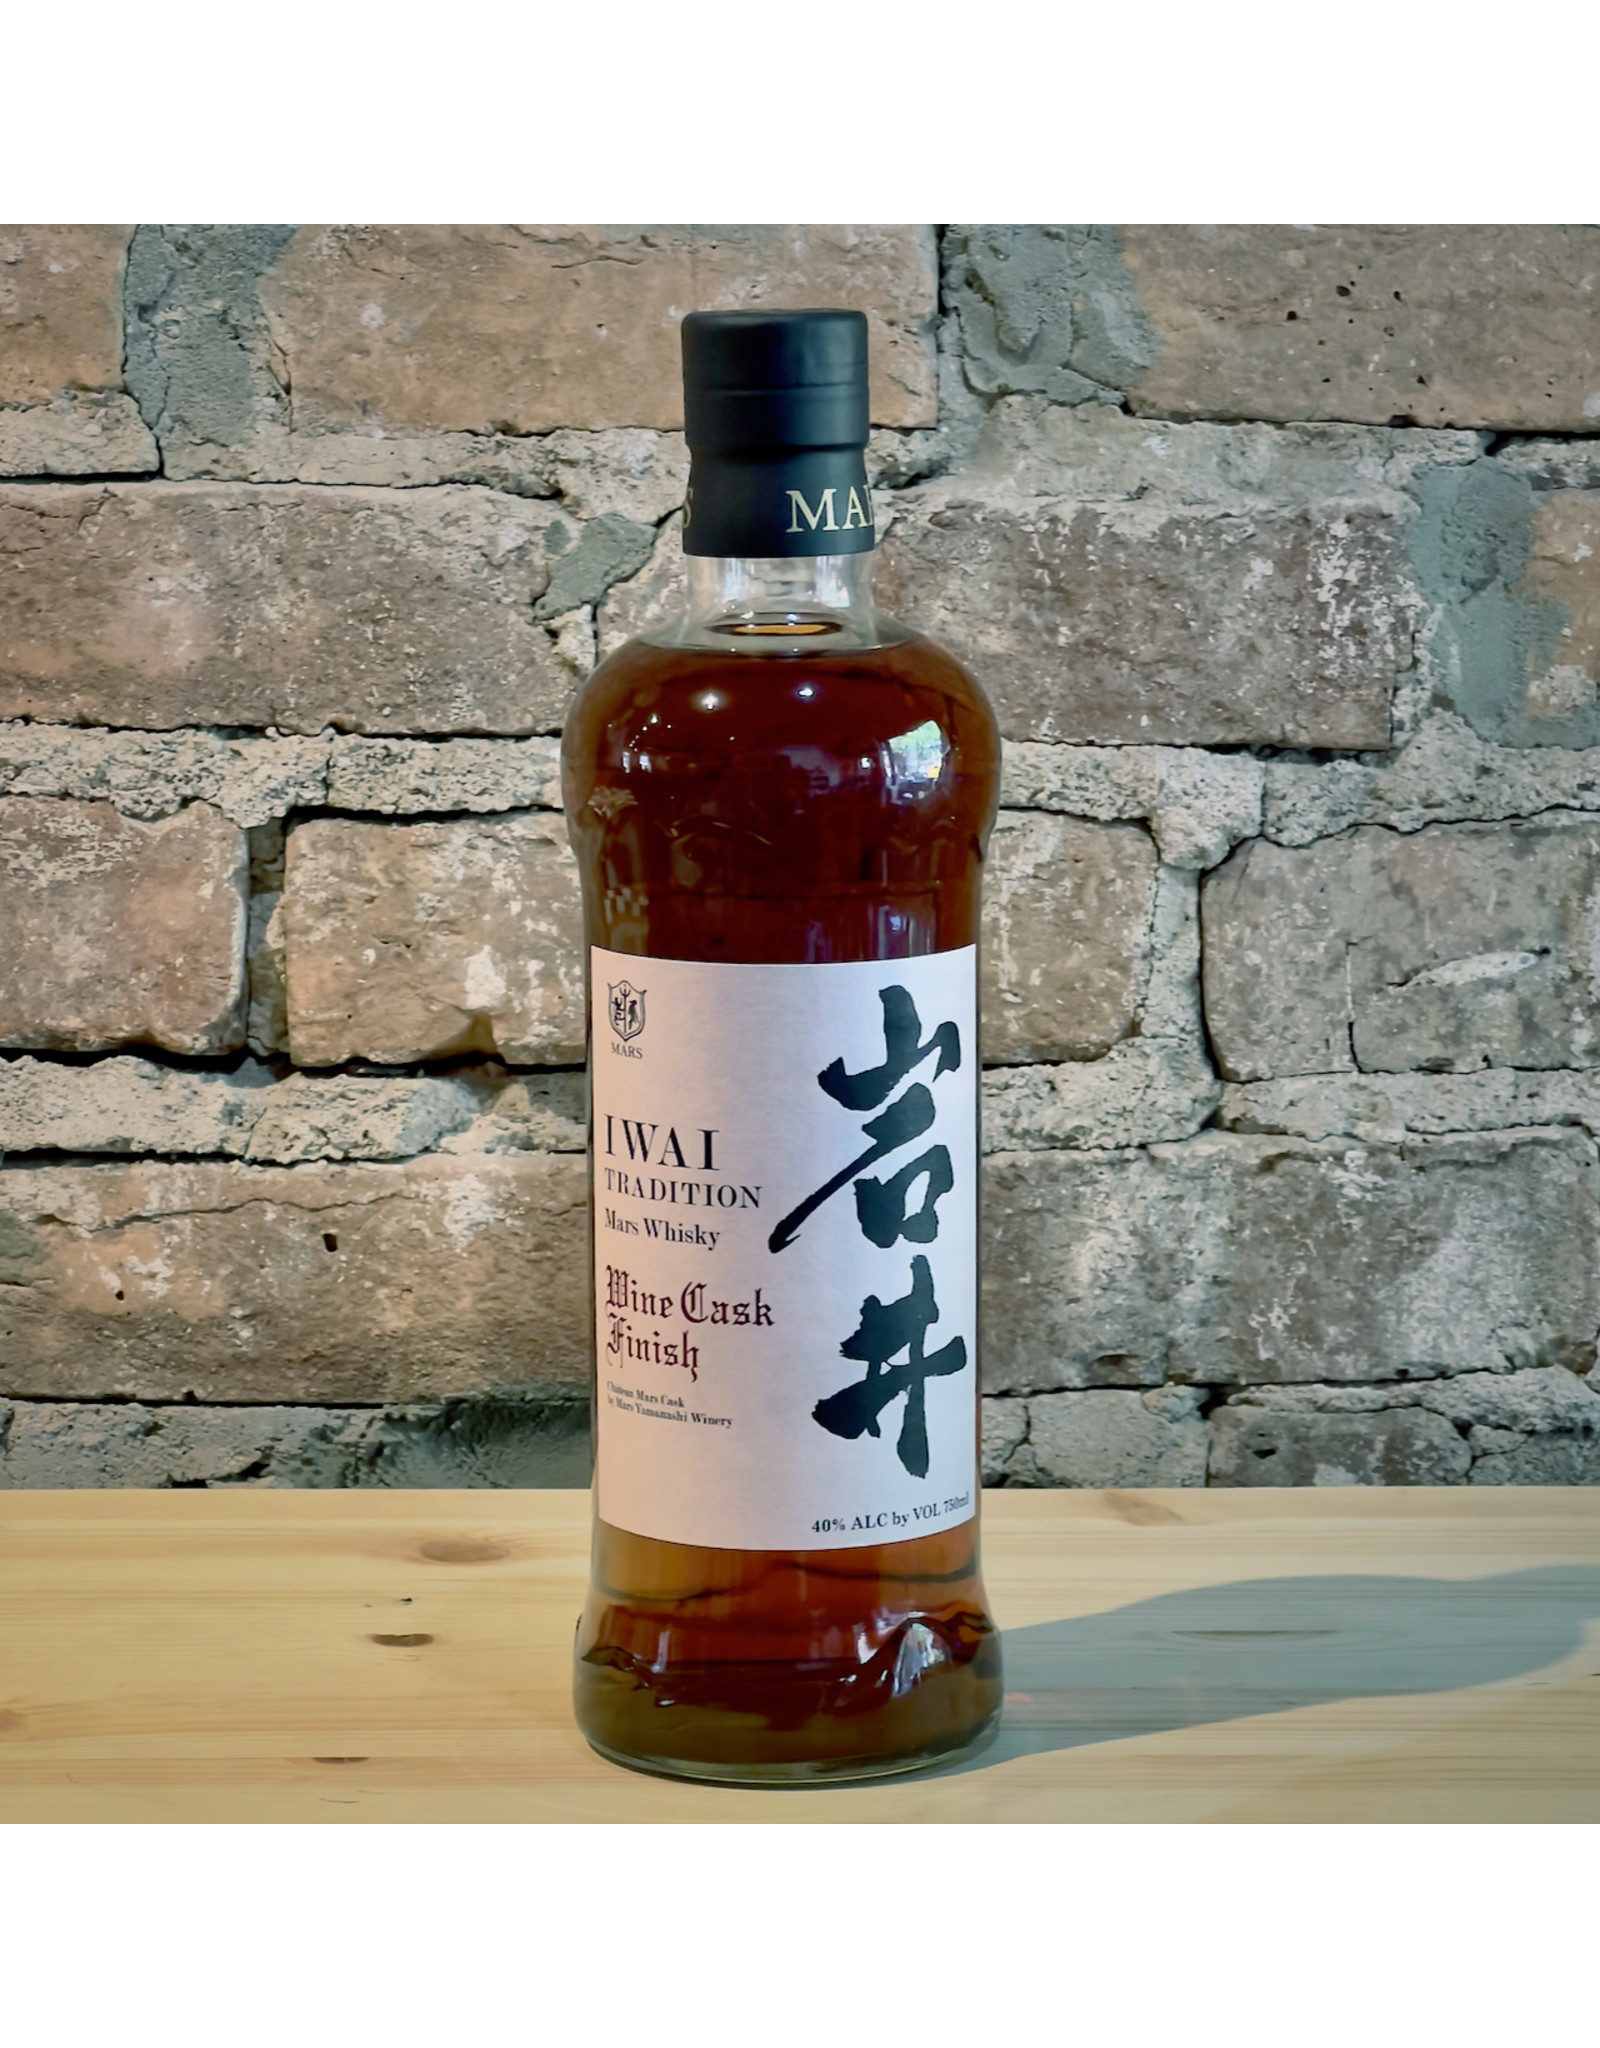 Skurnik IWAI TRADITION - WINE CASK FINISH Single Malt Whisky - Mars Shinshu Distillery